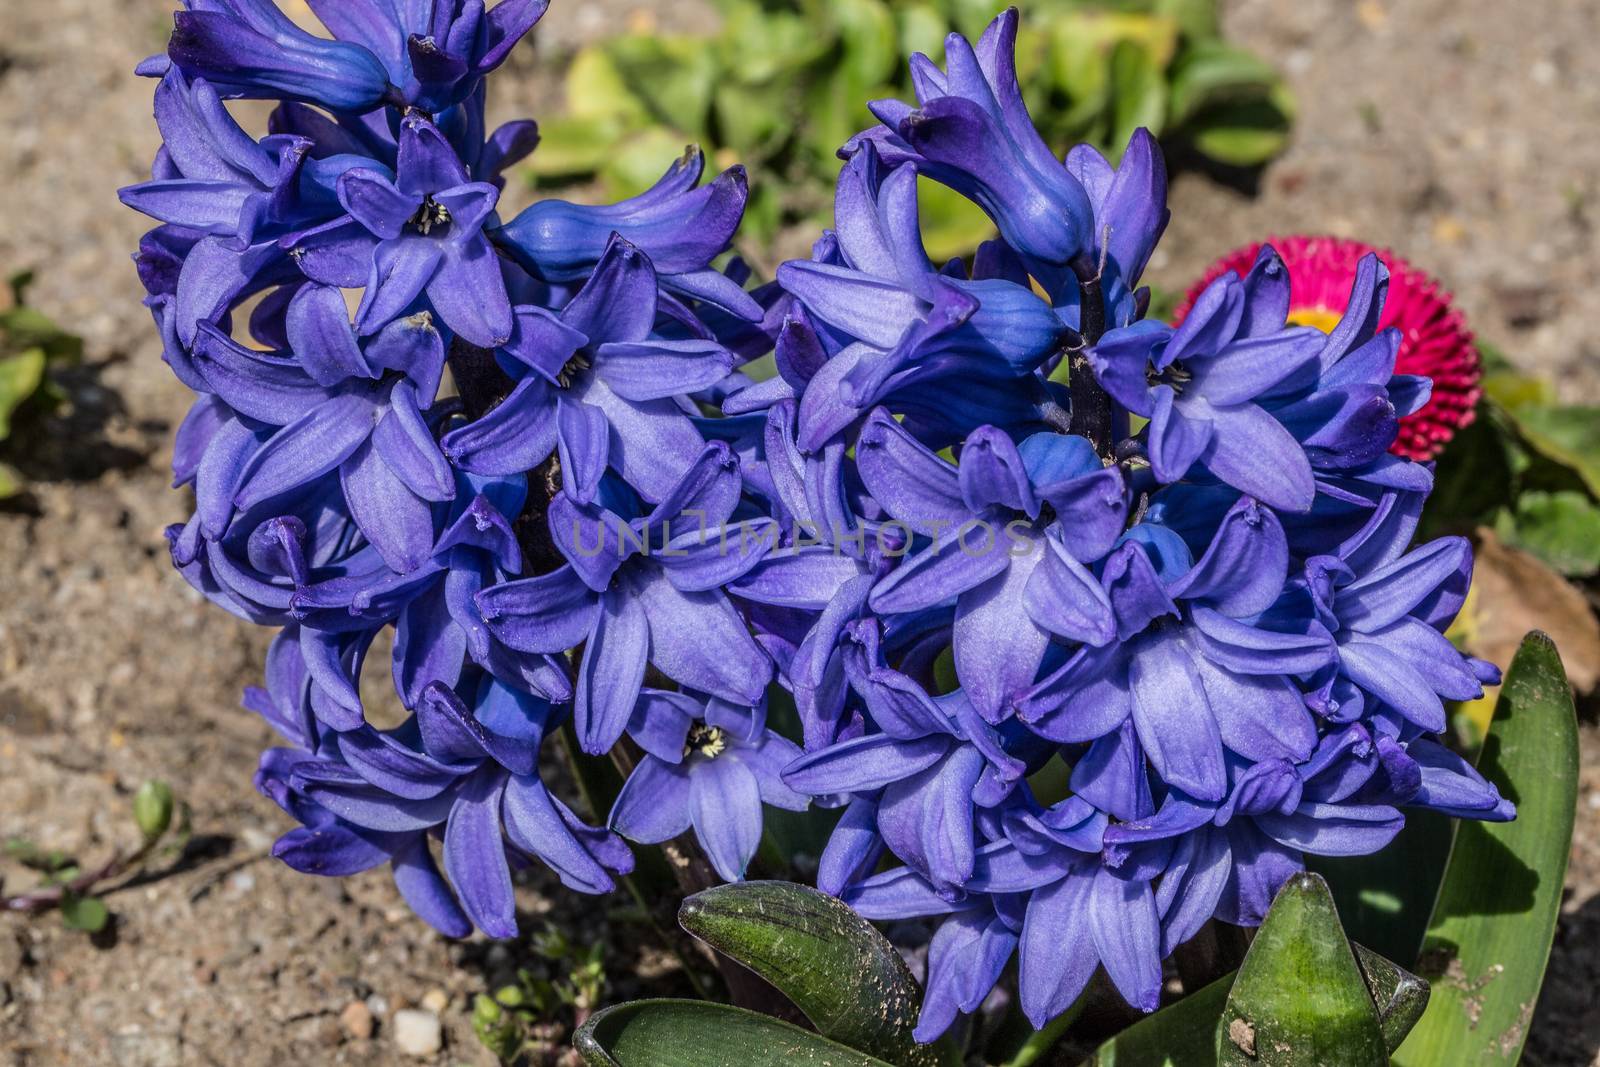 blue hyacinths in flower bed